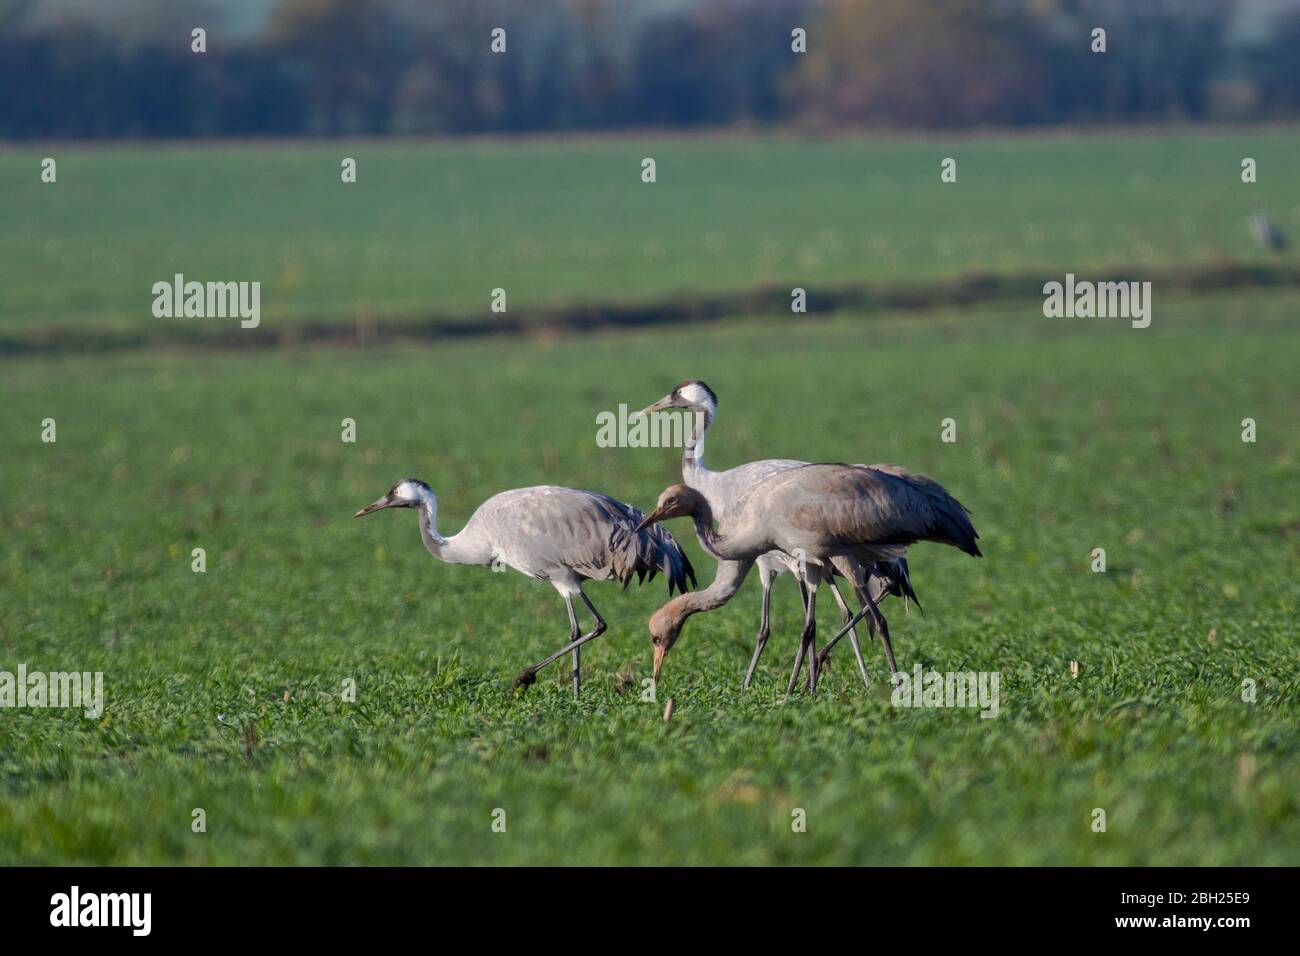 Germany, Common cranes (Grus grus) grazing in field Stock Photo